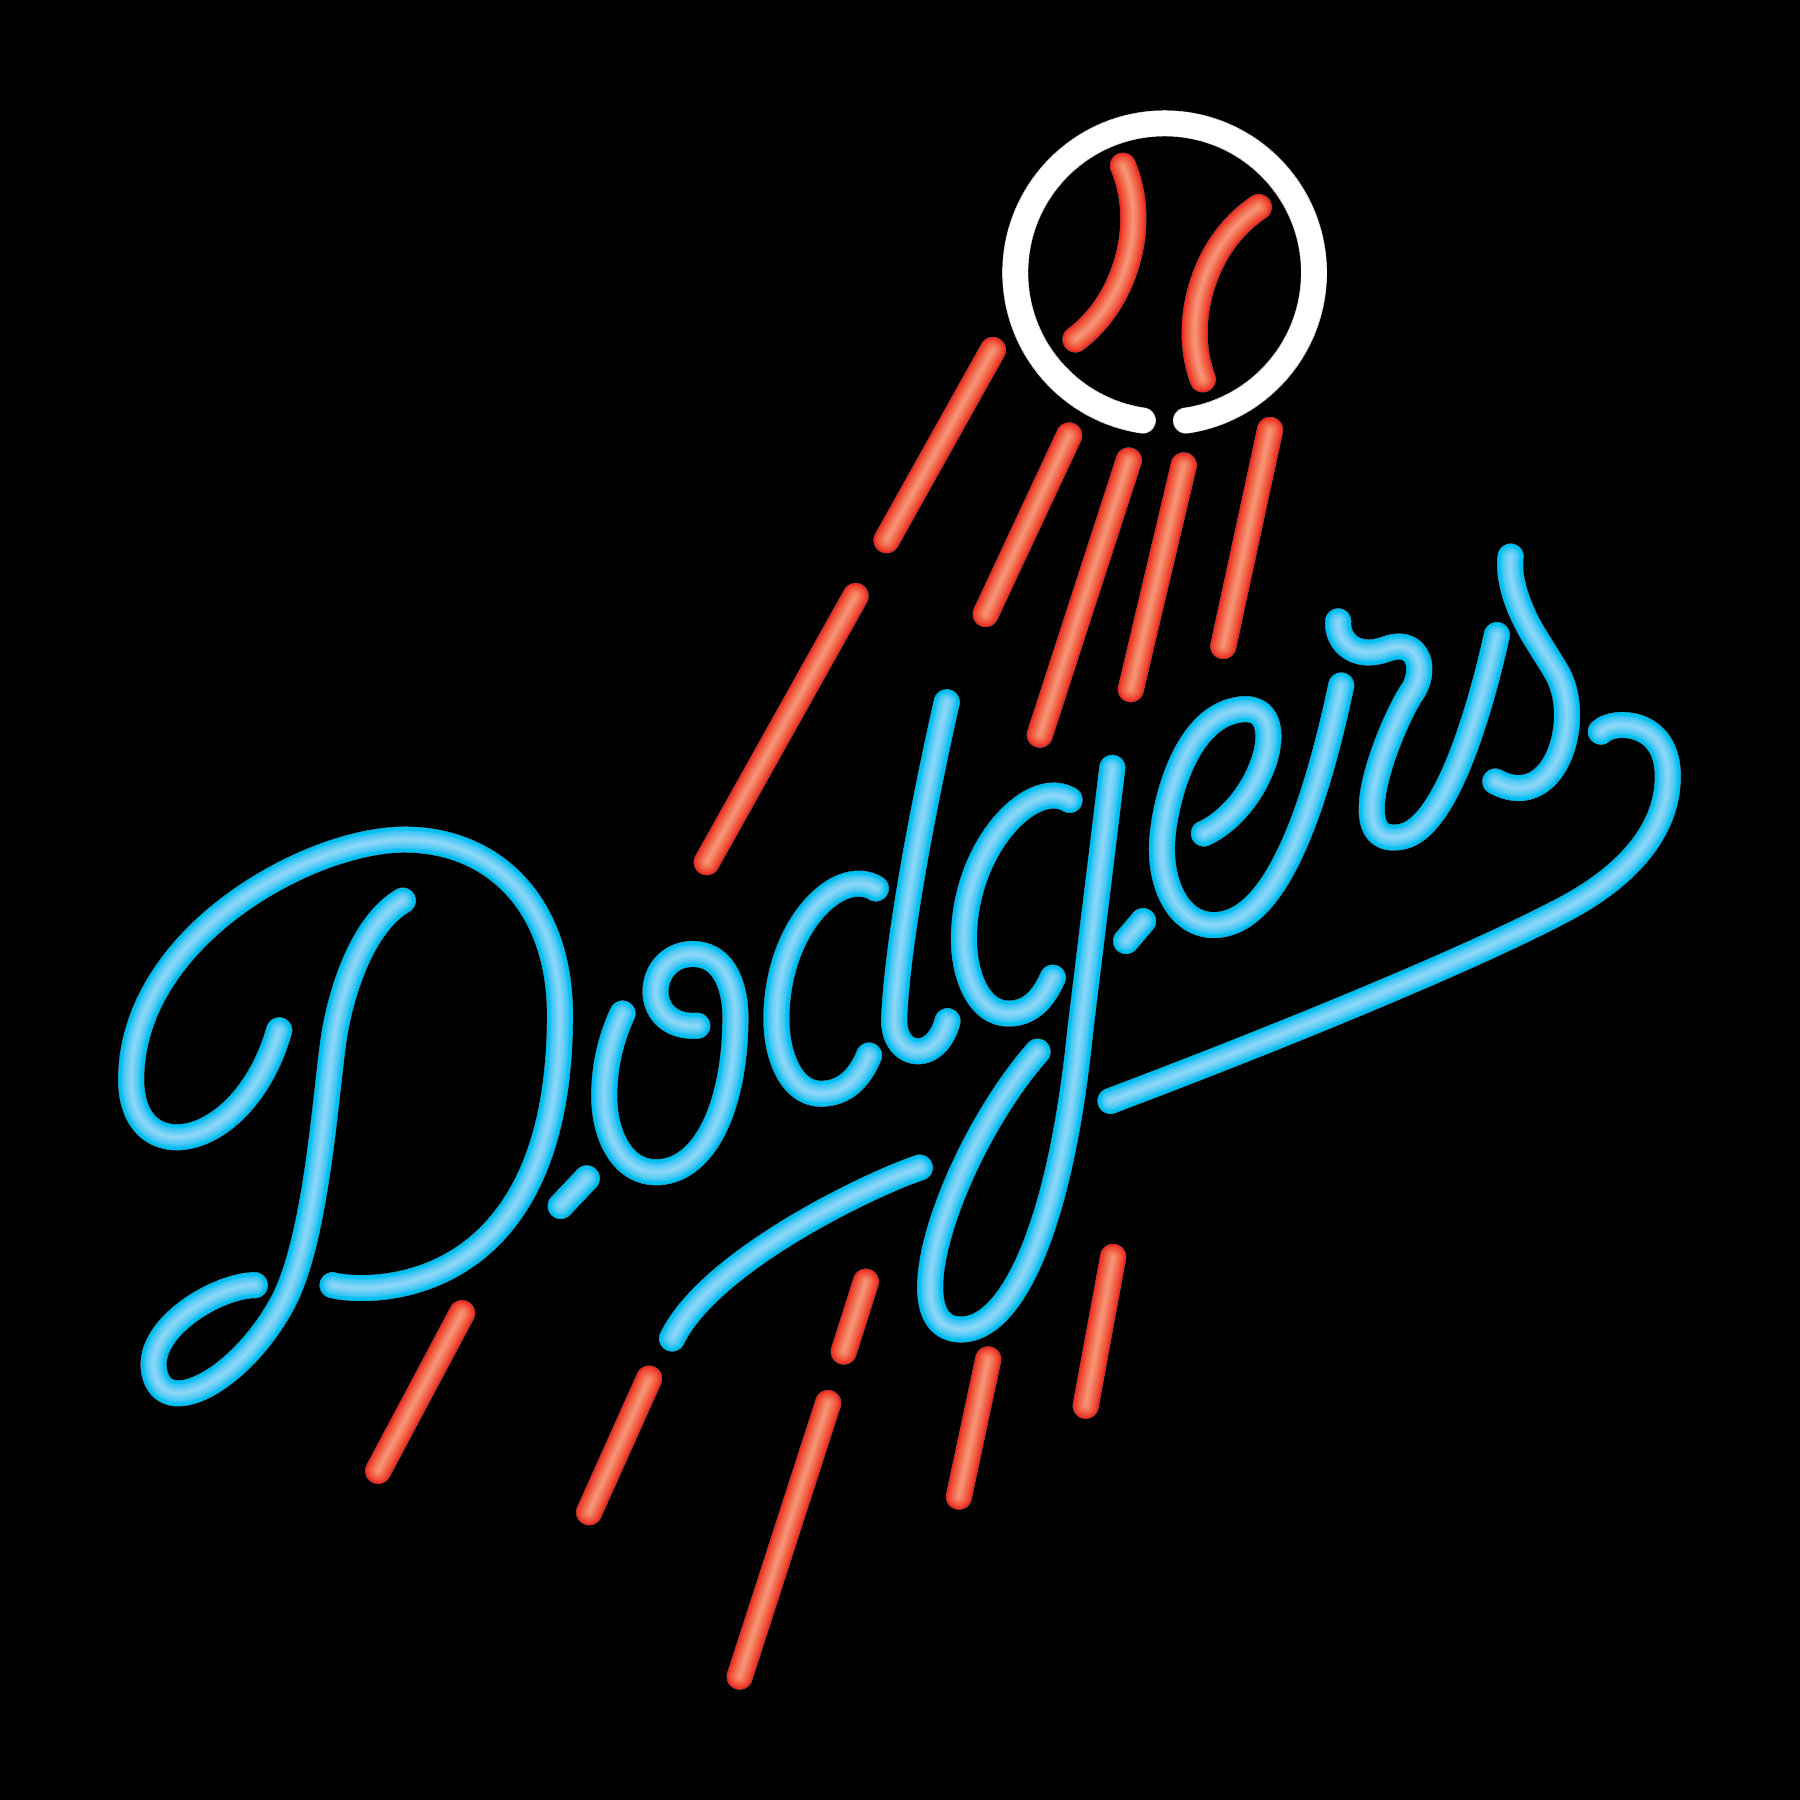 61 La Dodgers iPhone